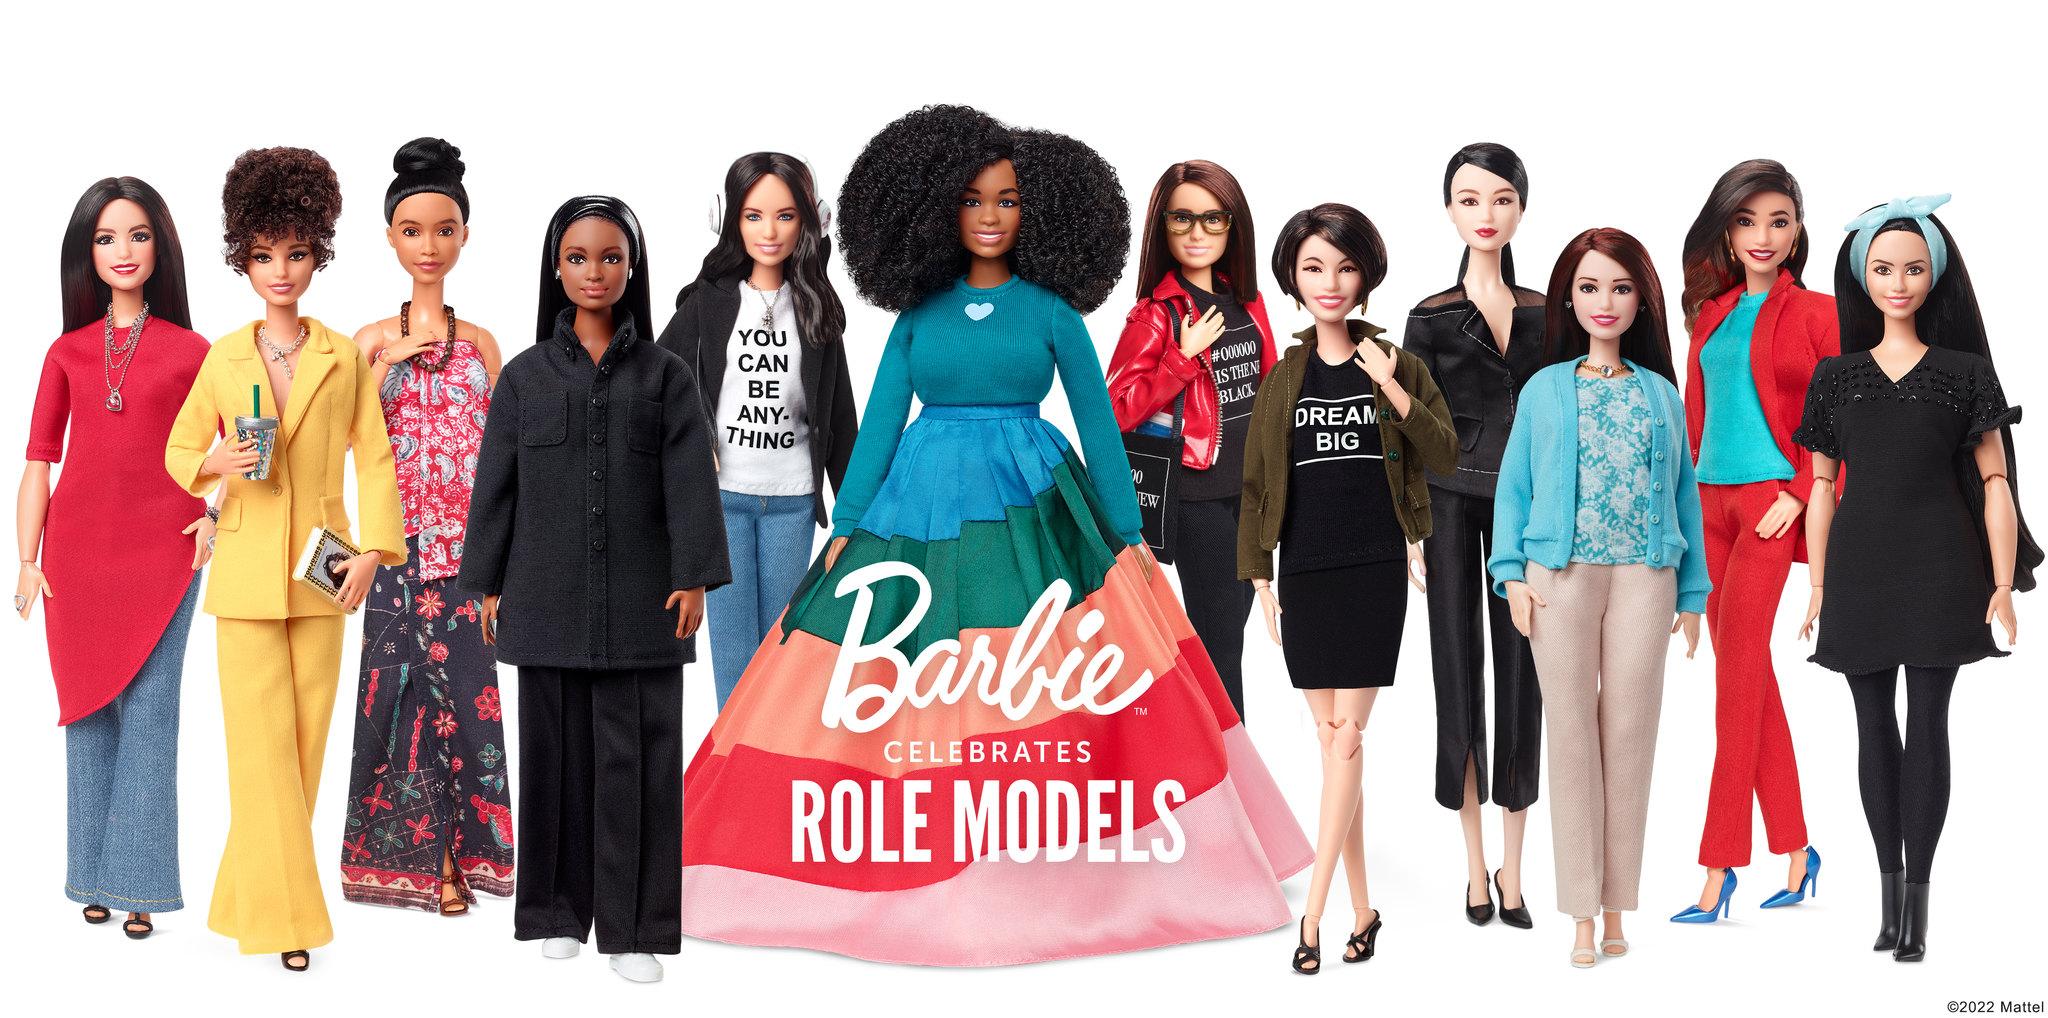 Barbies role models 2022